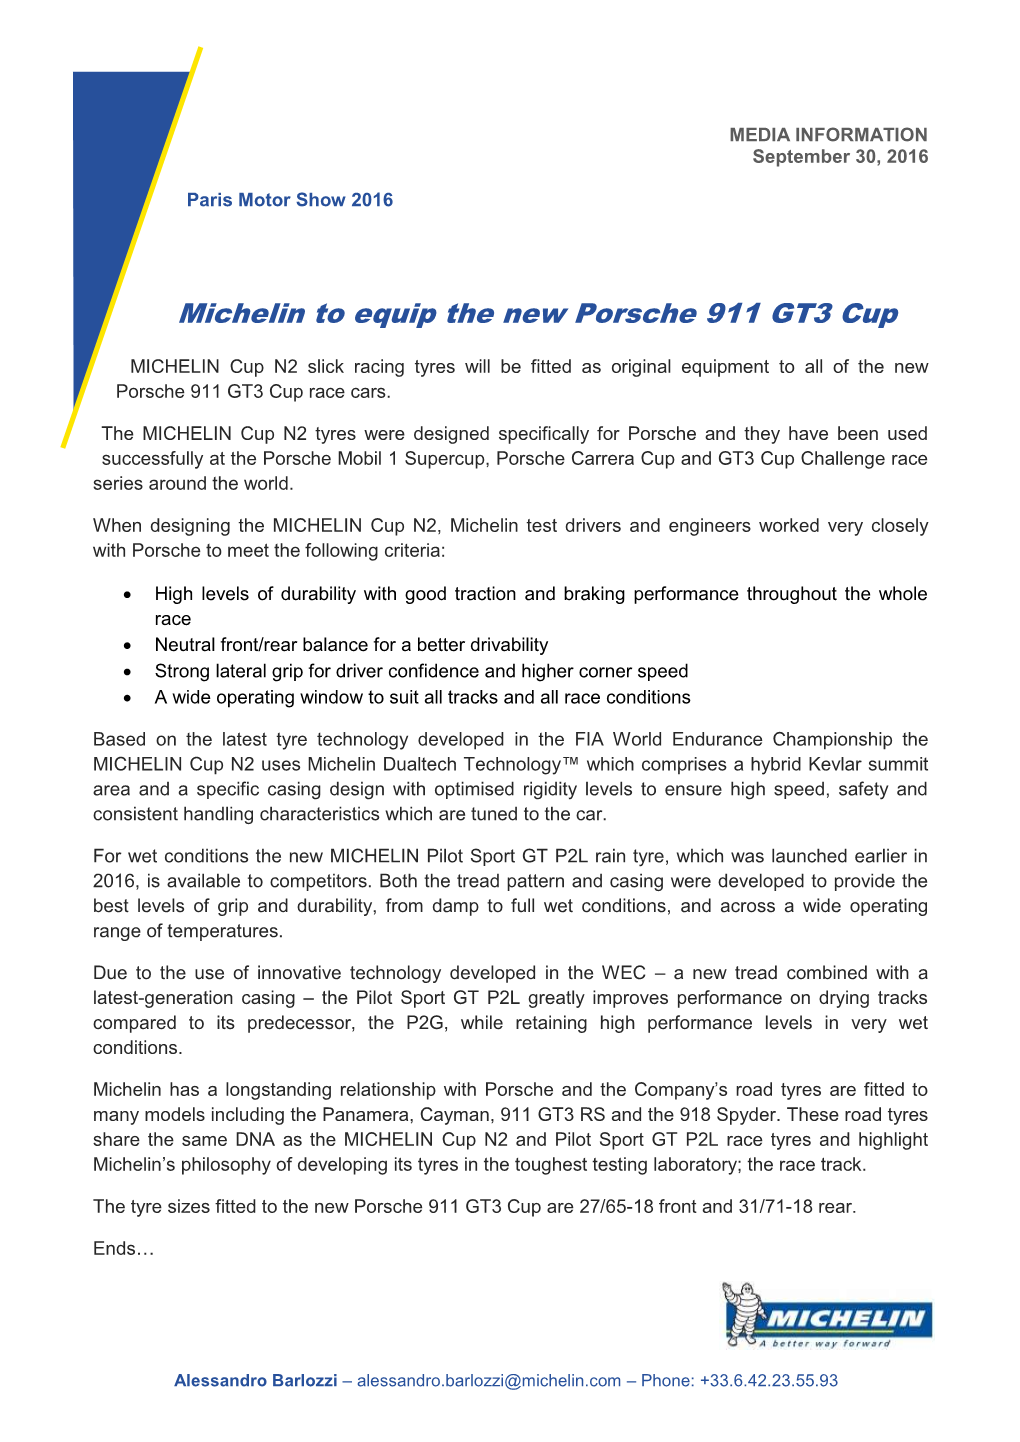 Michelin to Equip the New Porsche 911 GT3 Cup EN.Pdf